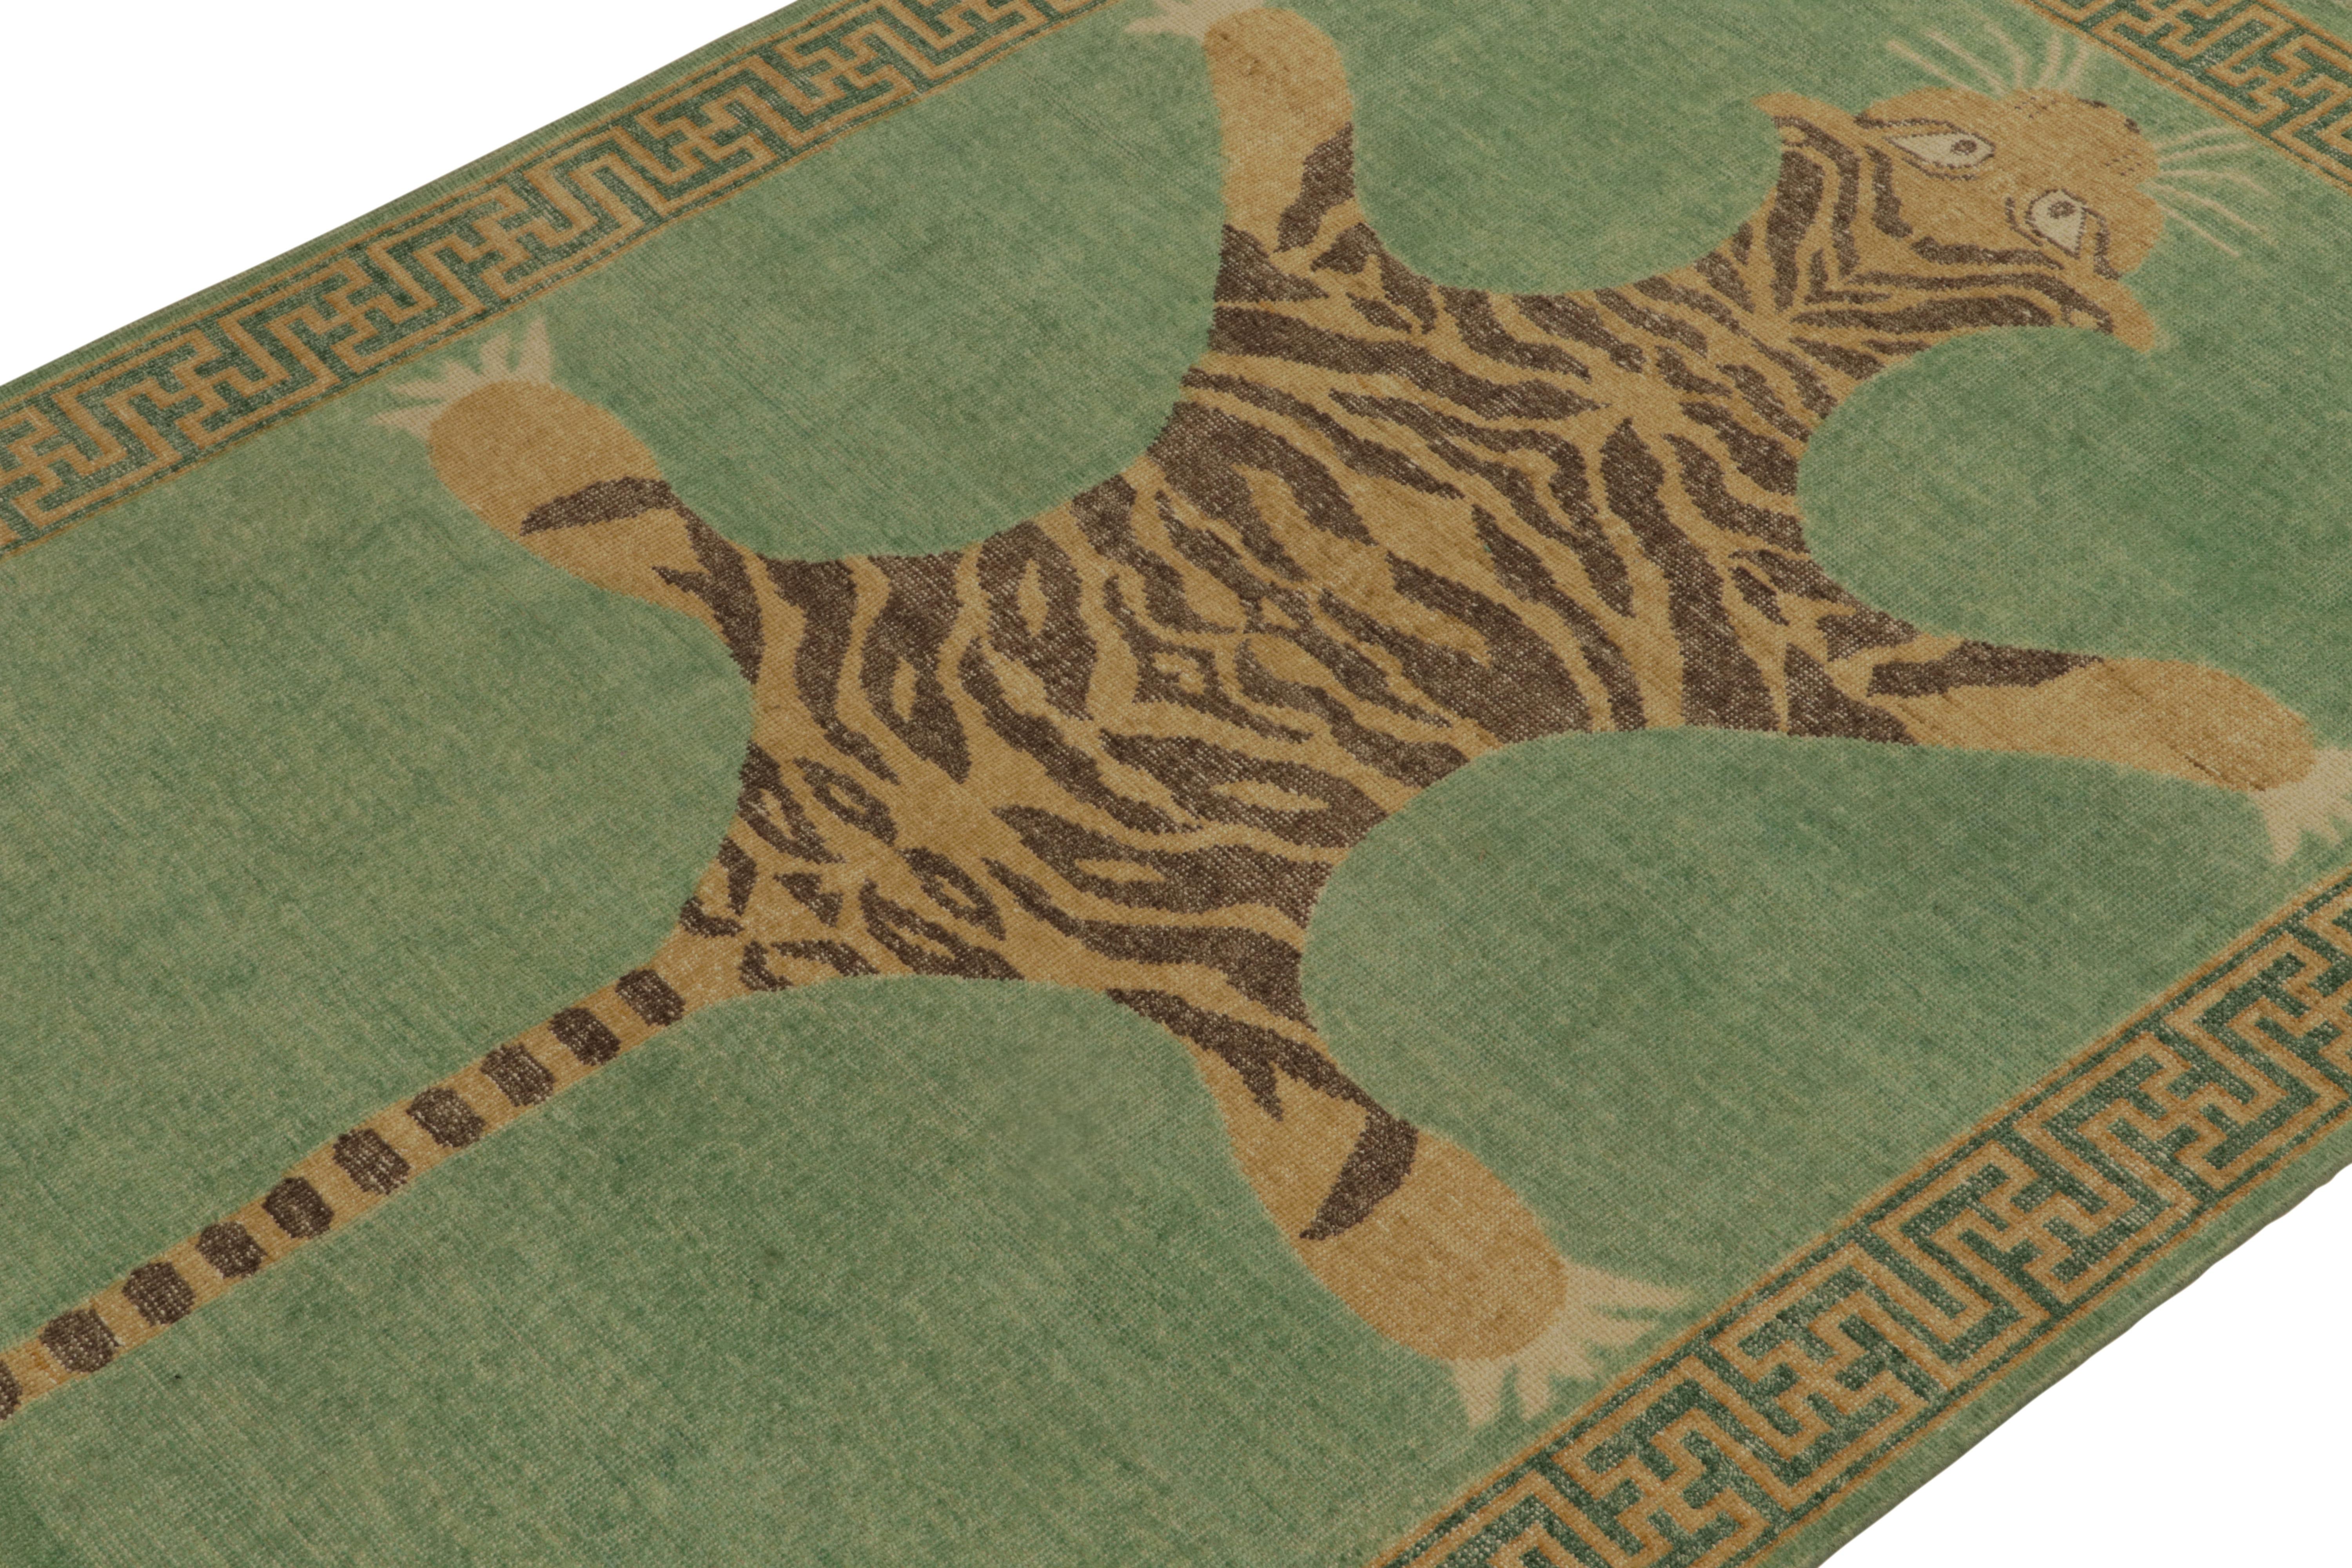 Indian Rug & Kilim’s Distressed Tiger Skin Style Rug in Green, Beige & Black Pictorial  For Sale